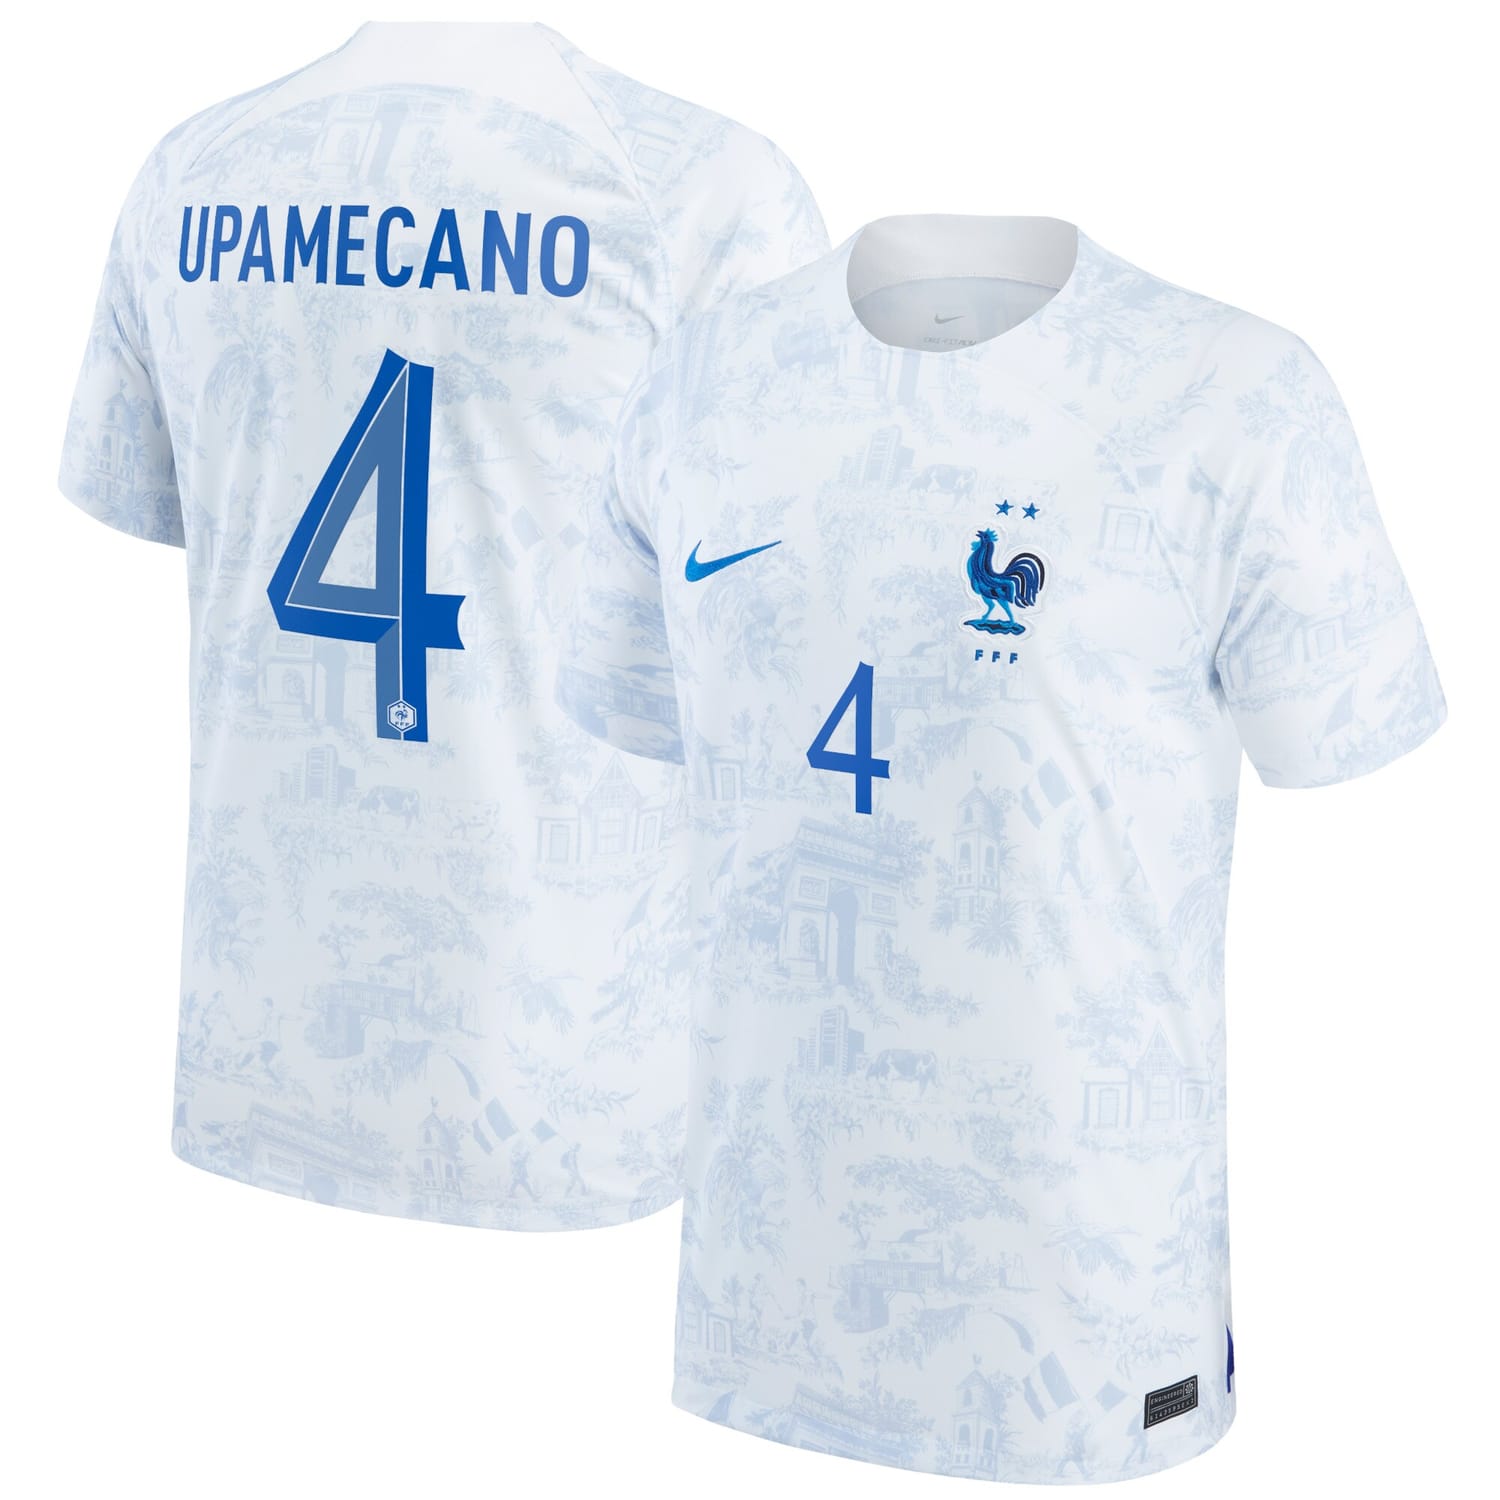 France National Team Away Jersey Shirt 2022 player Dayot Upamecano printing for Men